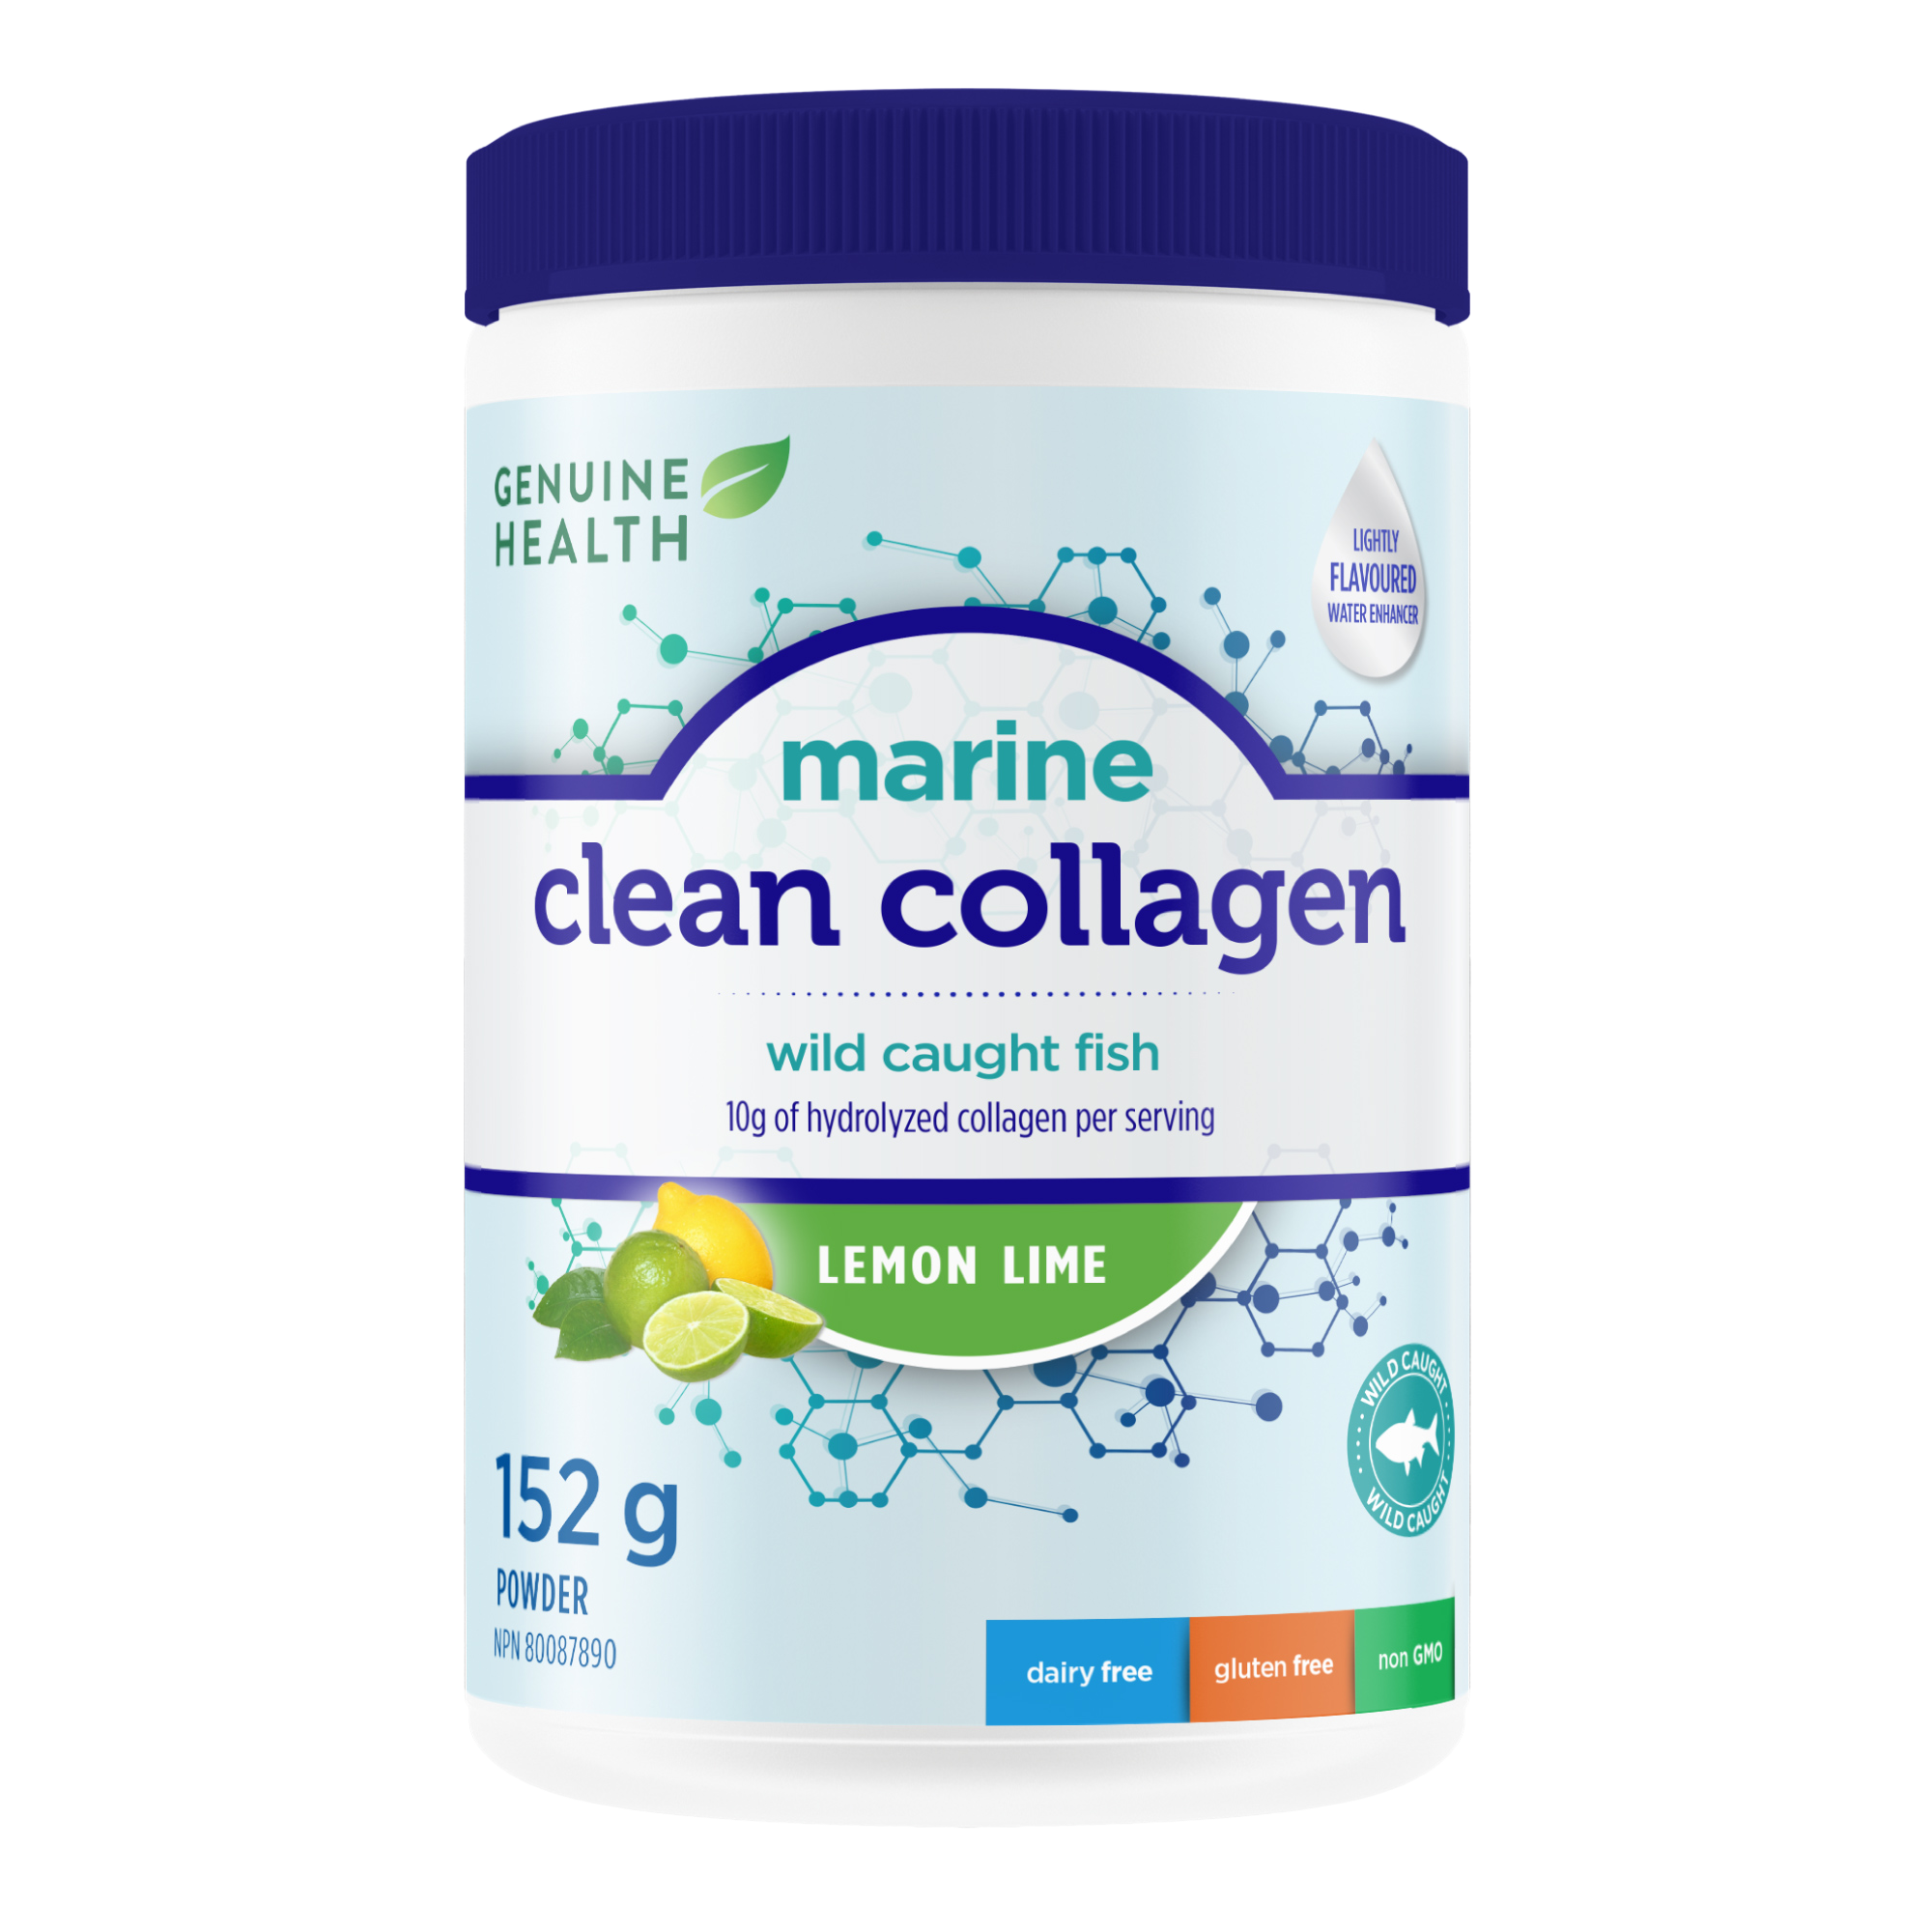 Genuine Health marine collagen lemon lime (152 g)